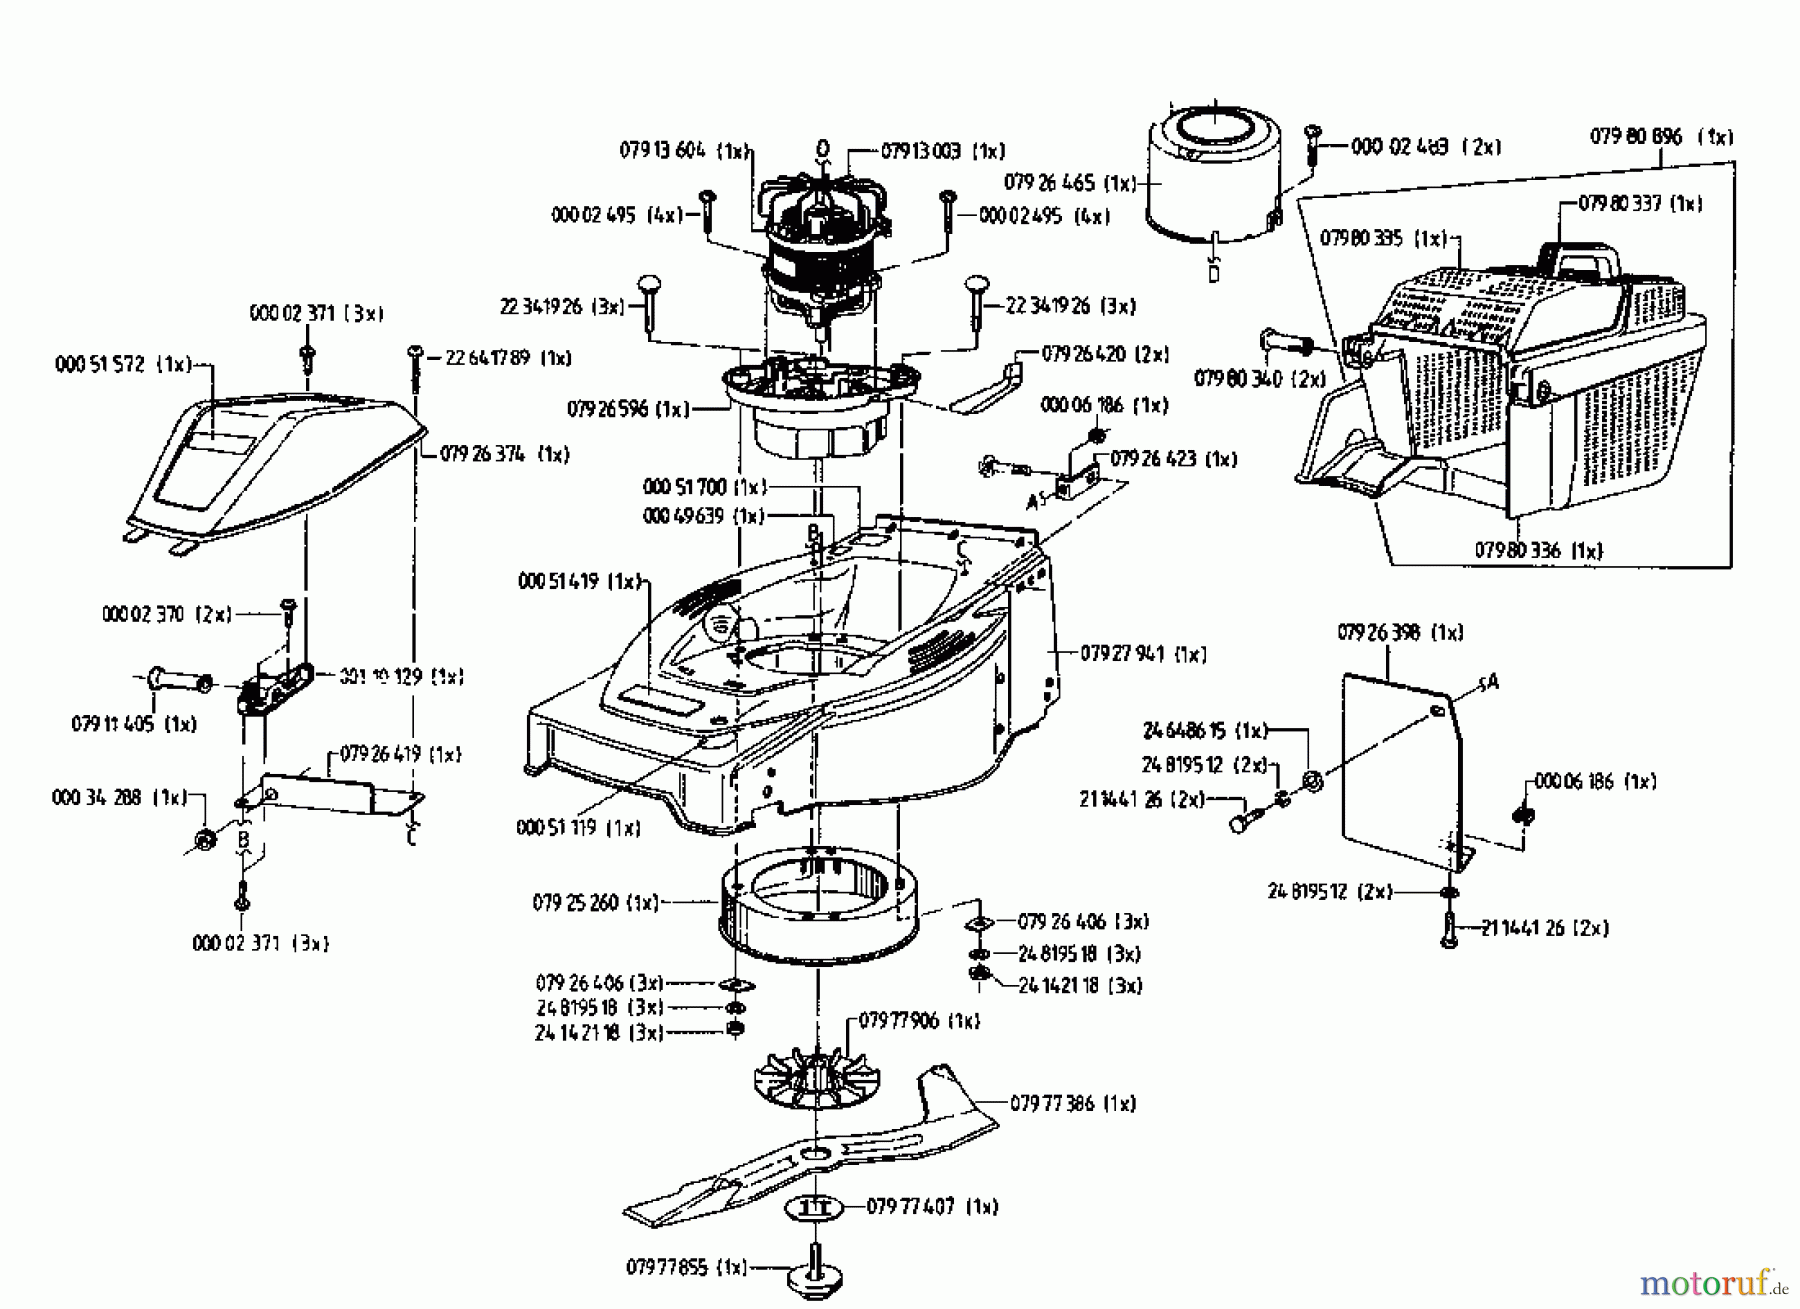  Gutbrod Electric mower HE 48 L 02817.03  (1995) Basic machine